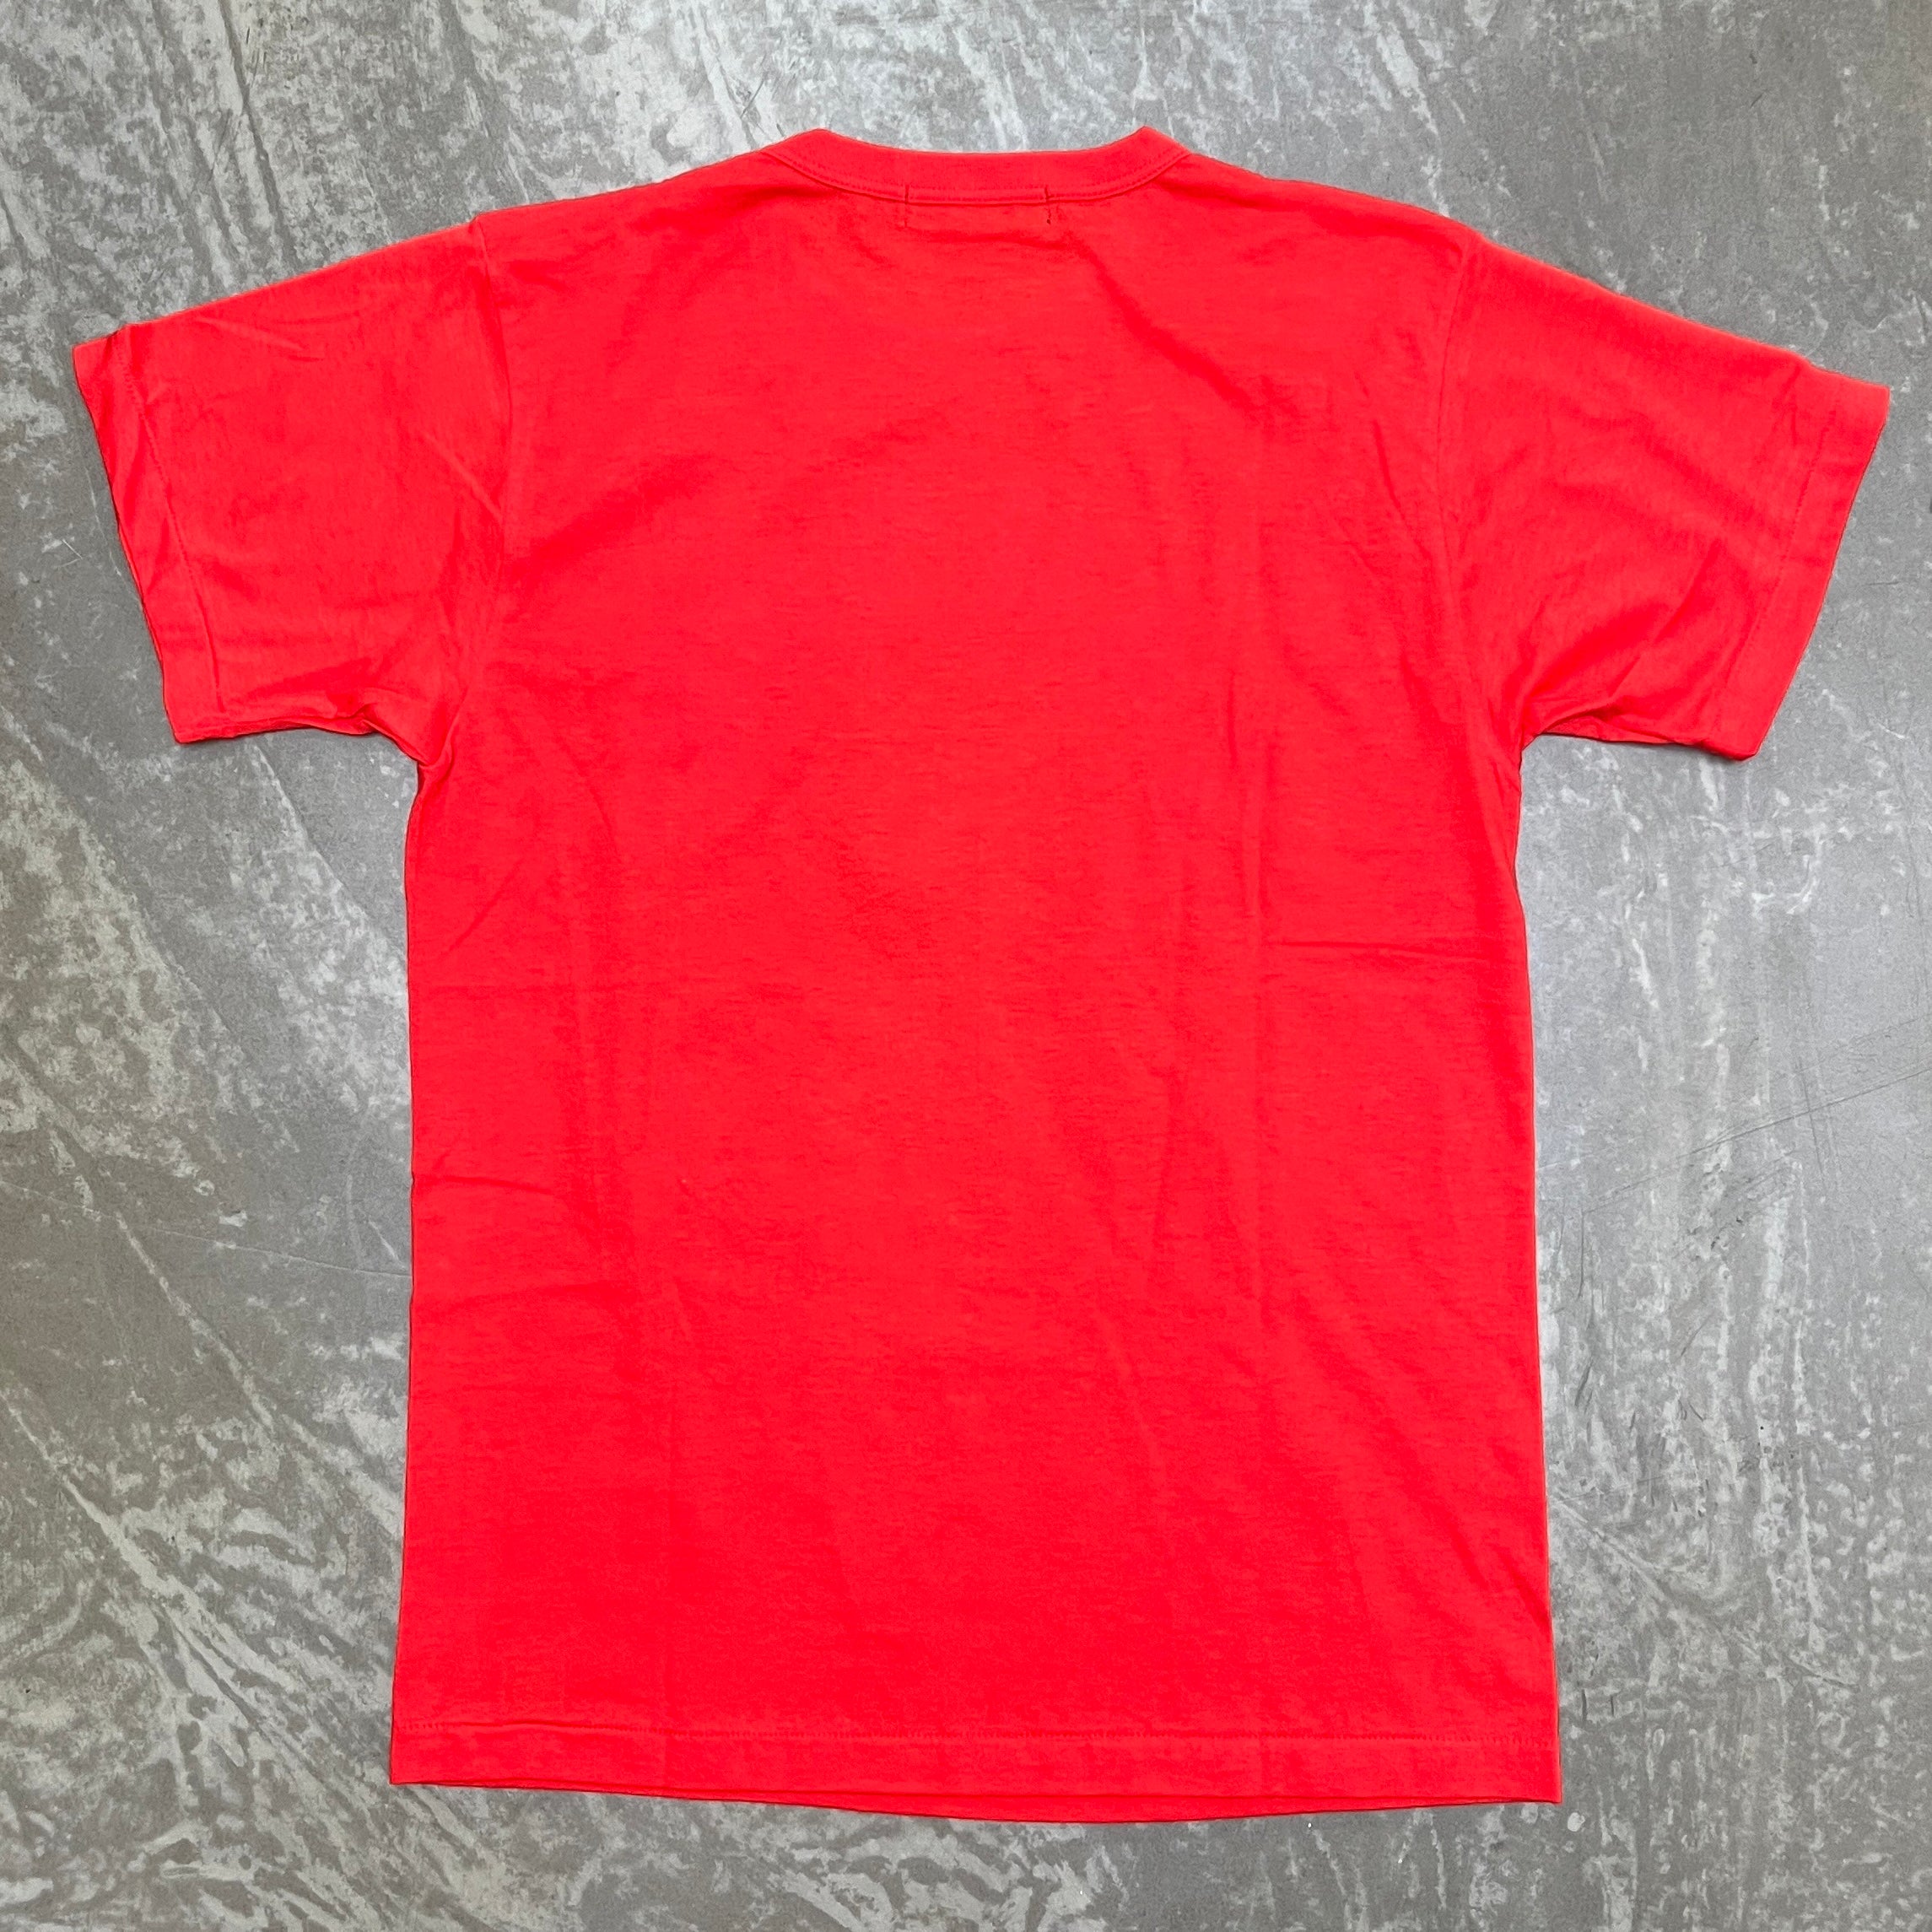 Bape T-shirt (storlek S)